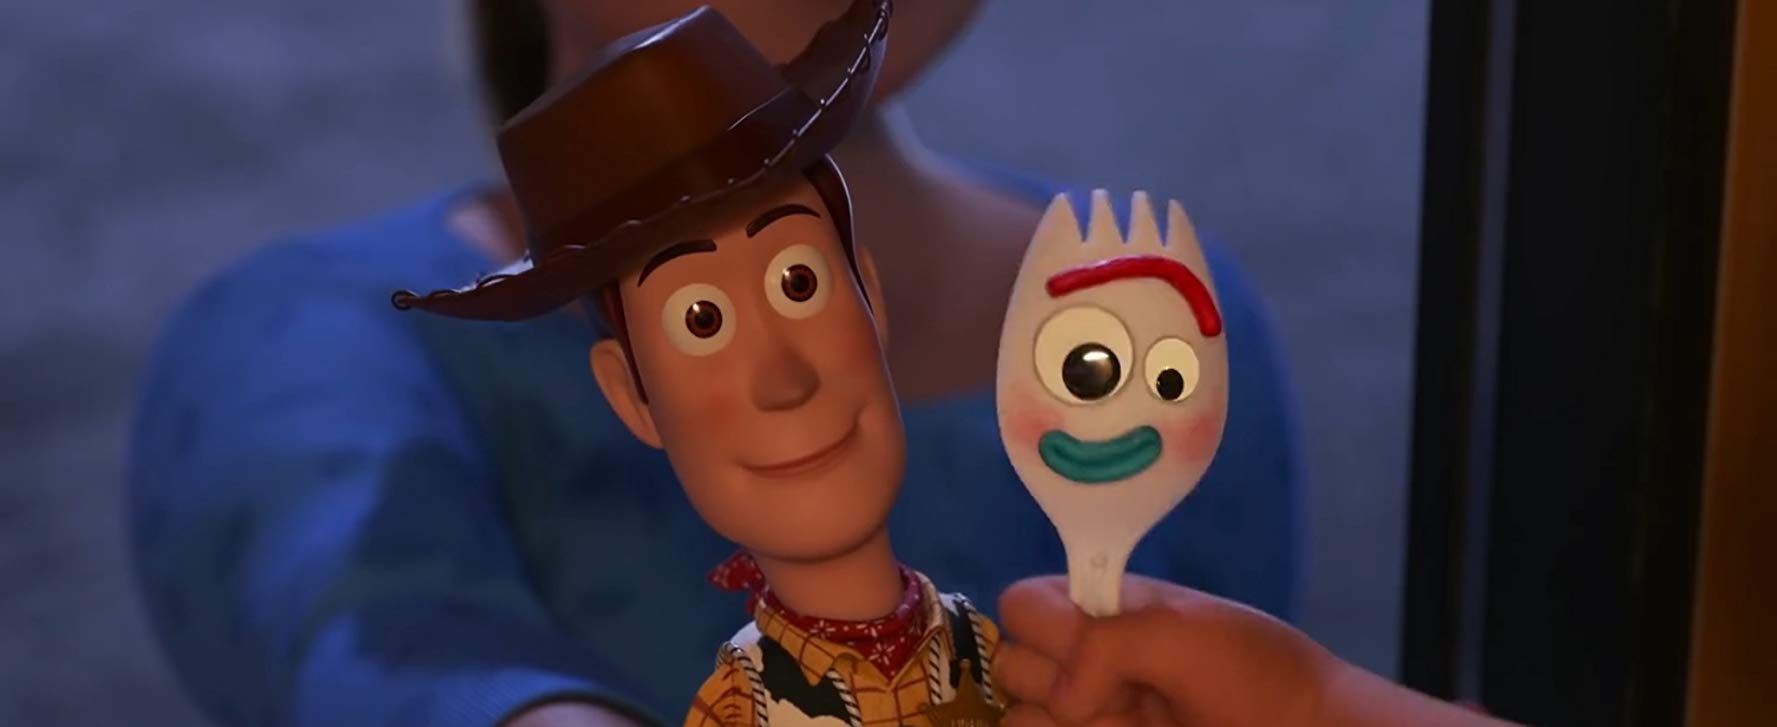 نقد انیمیشن Toy Story 4